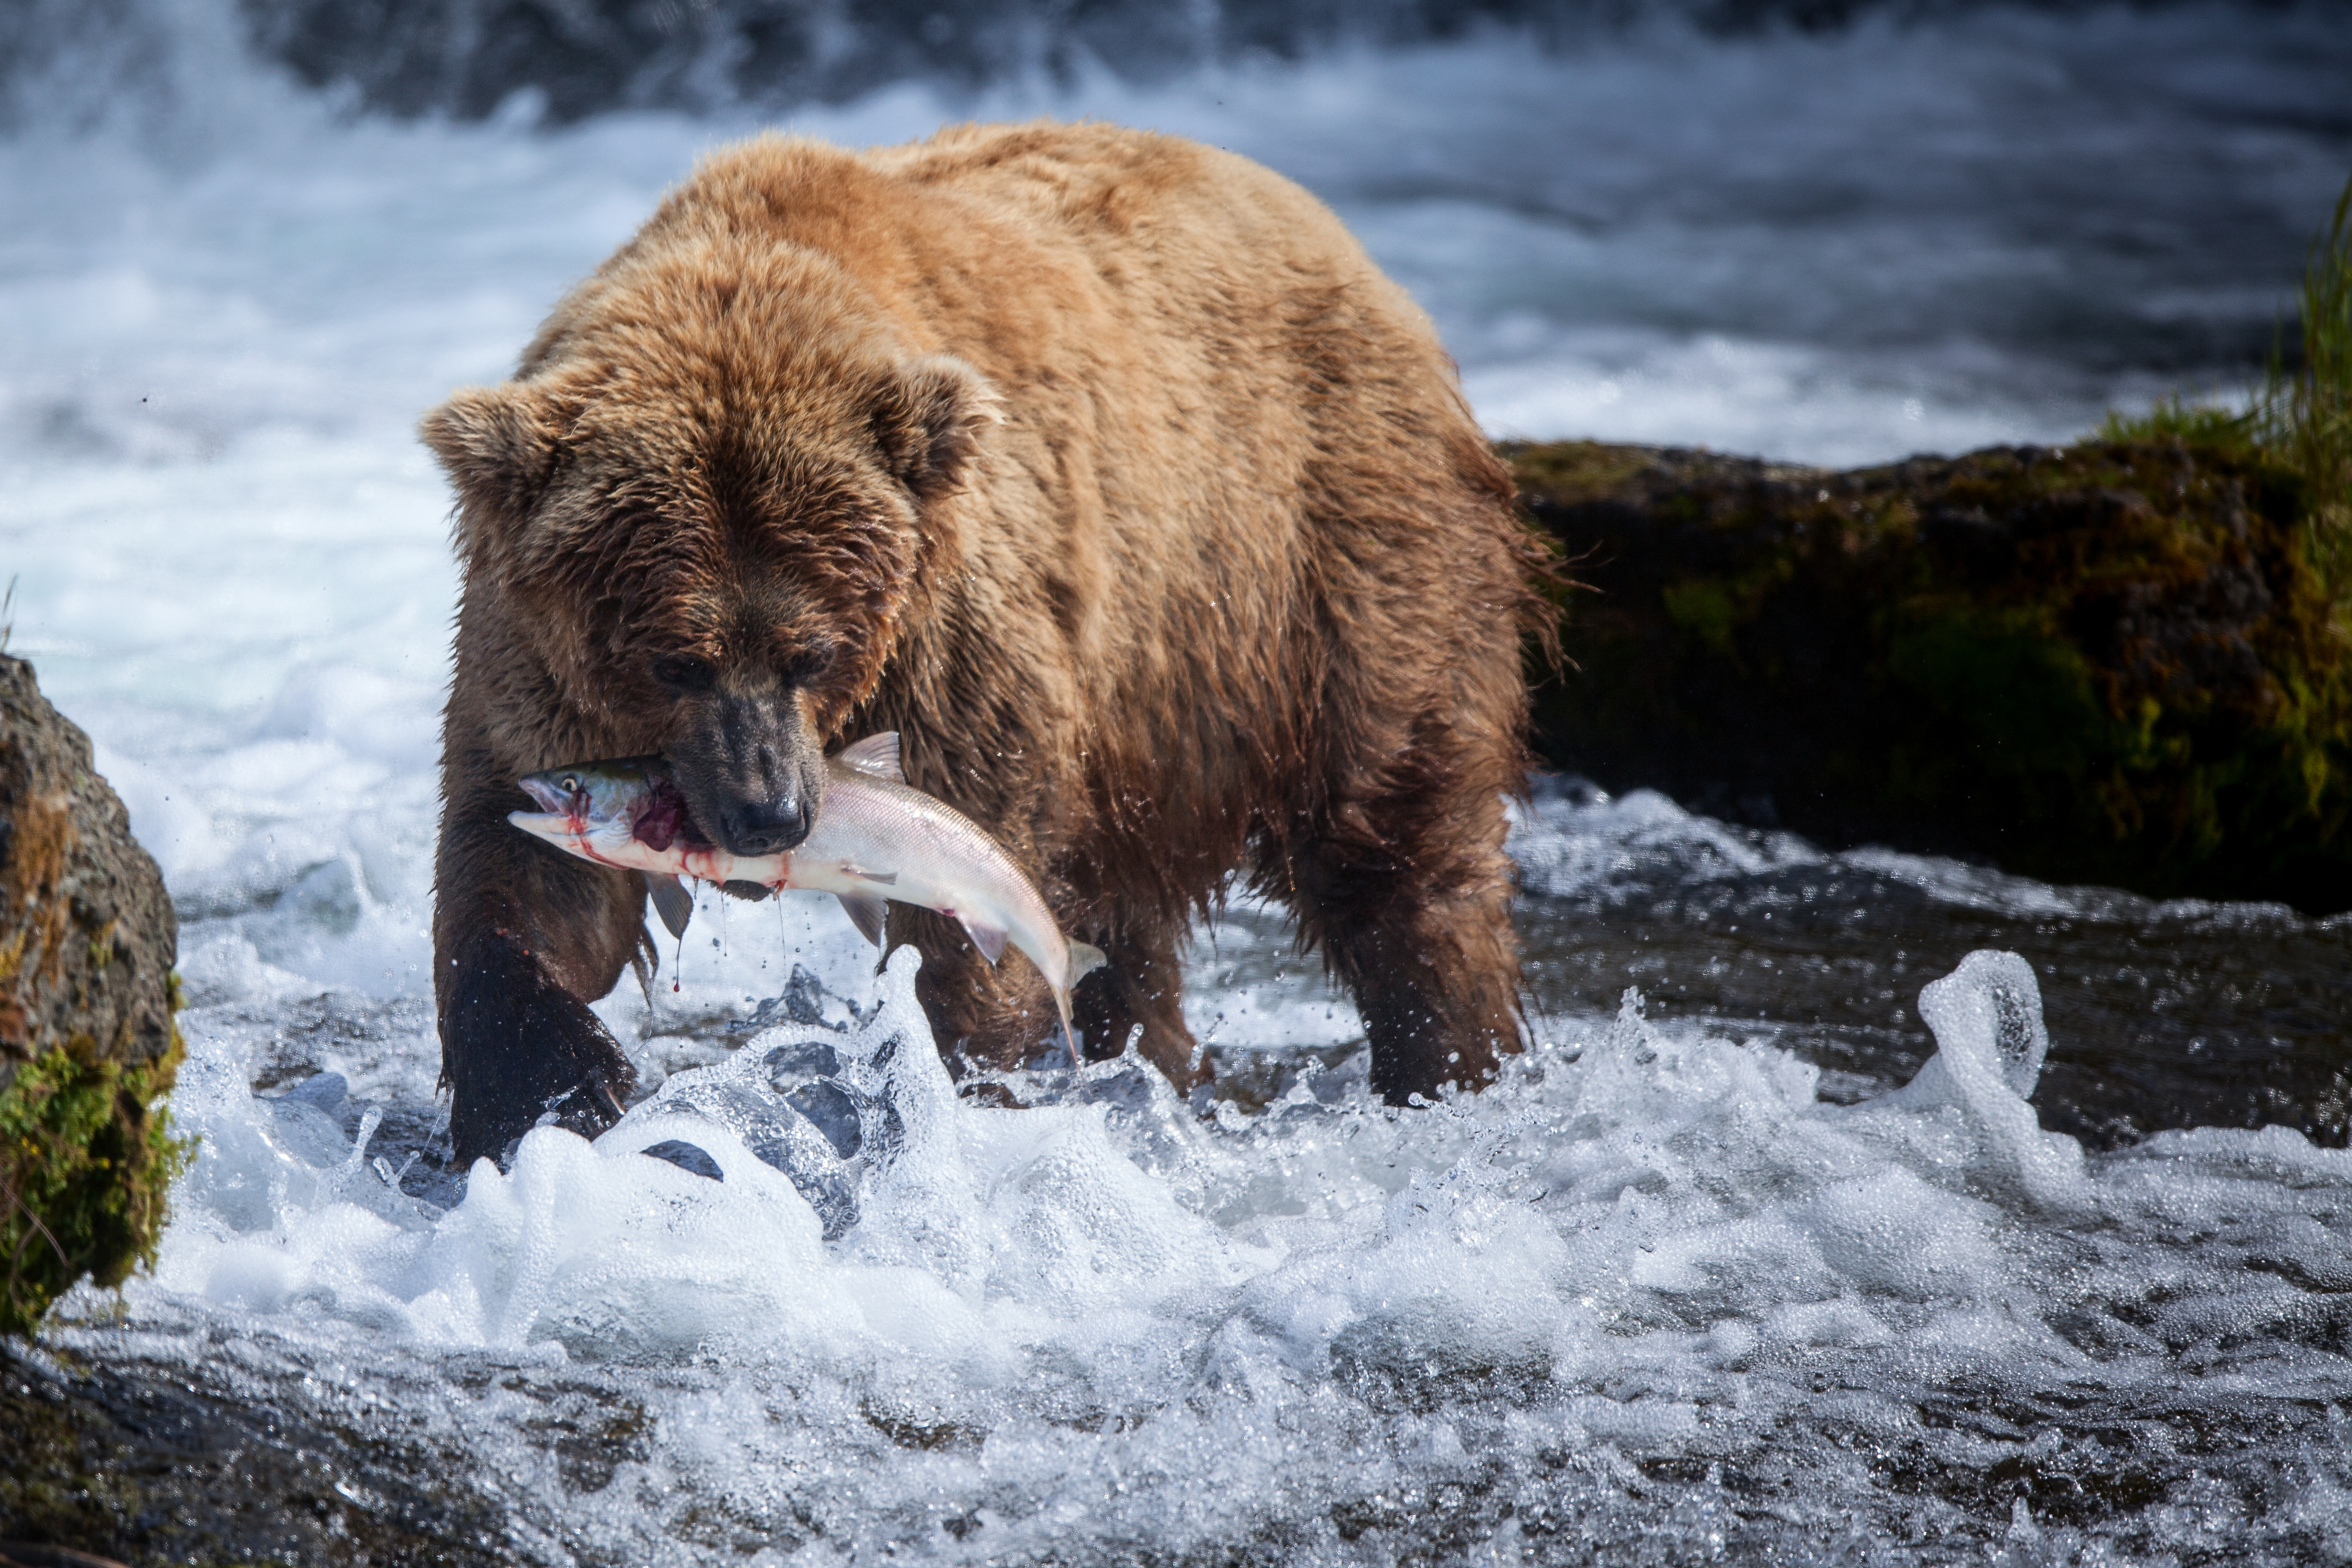 A bear catches a salmon in Brooks Falls in Alaska. Photo: Shutterstock
